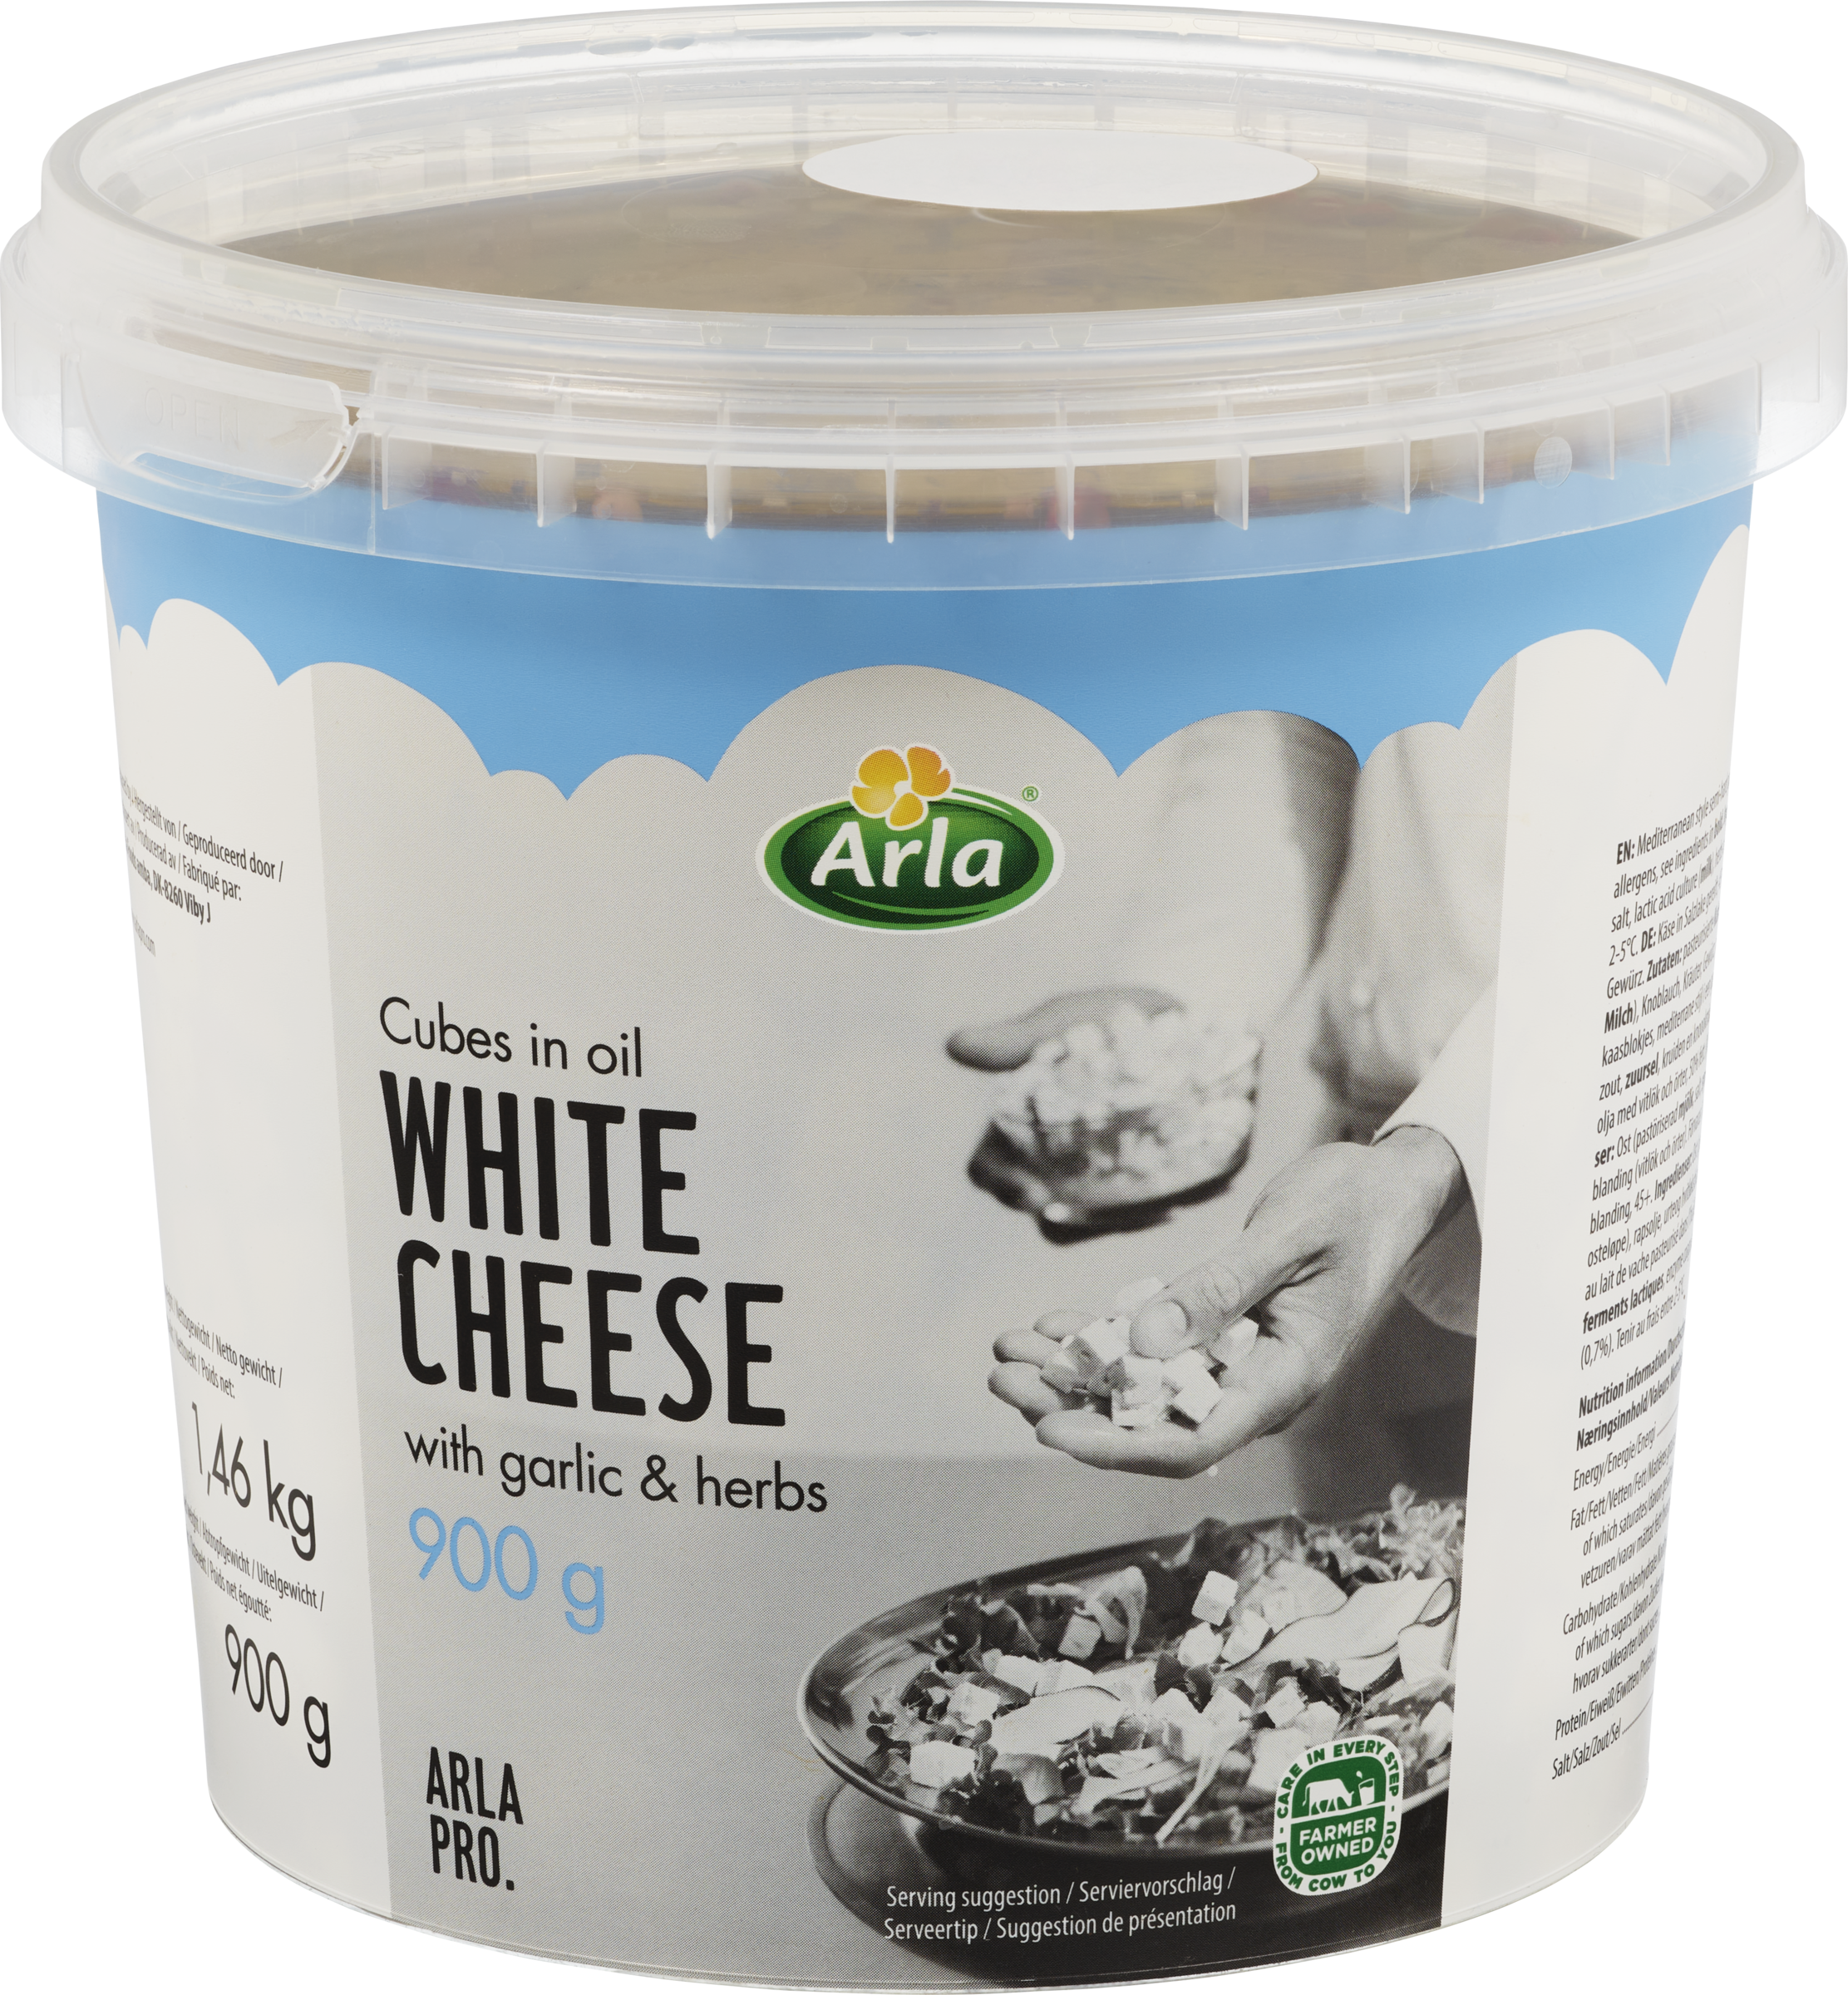 Arla Pro Arla Pro White Cheese Cubus in Oil 1.46kg (0.9kg ost)